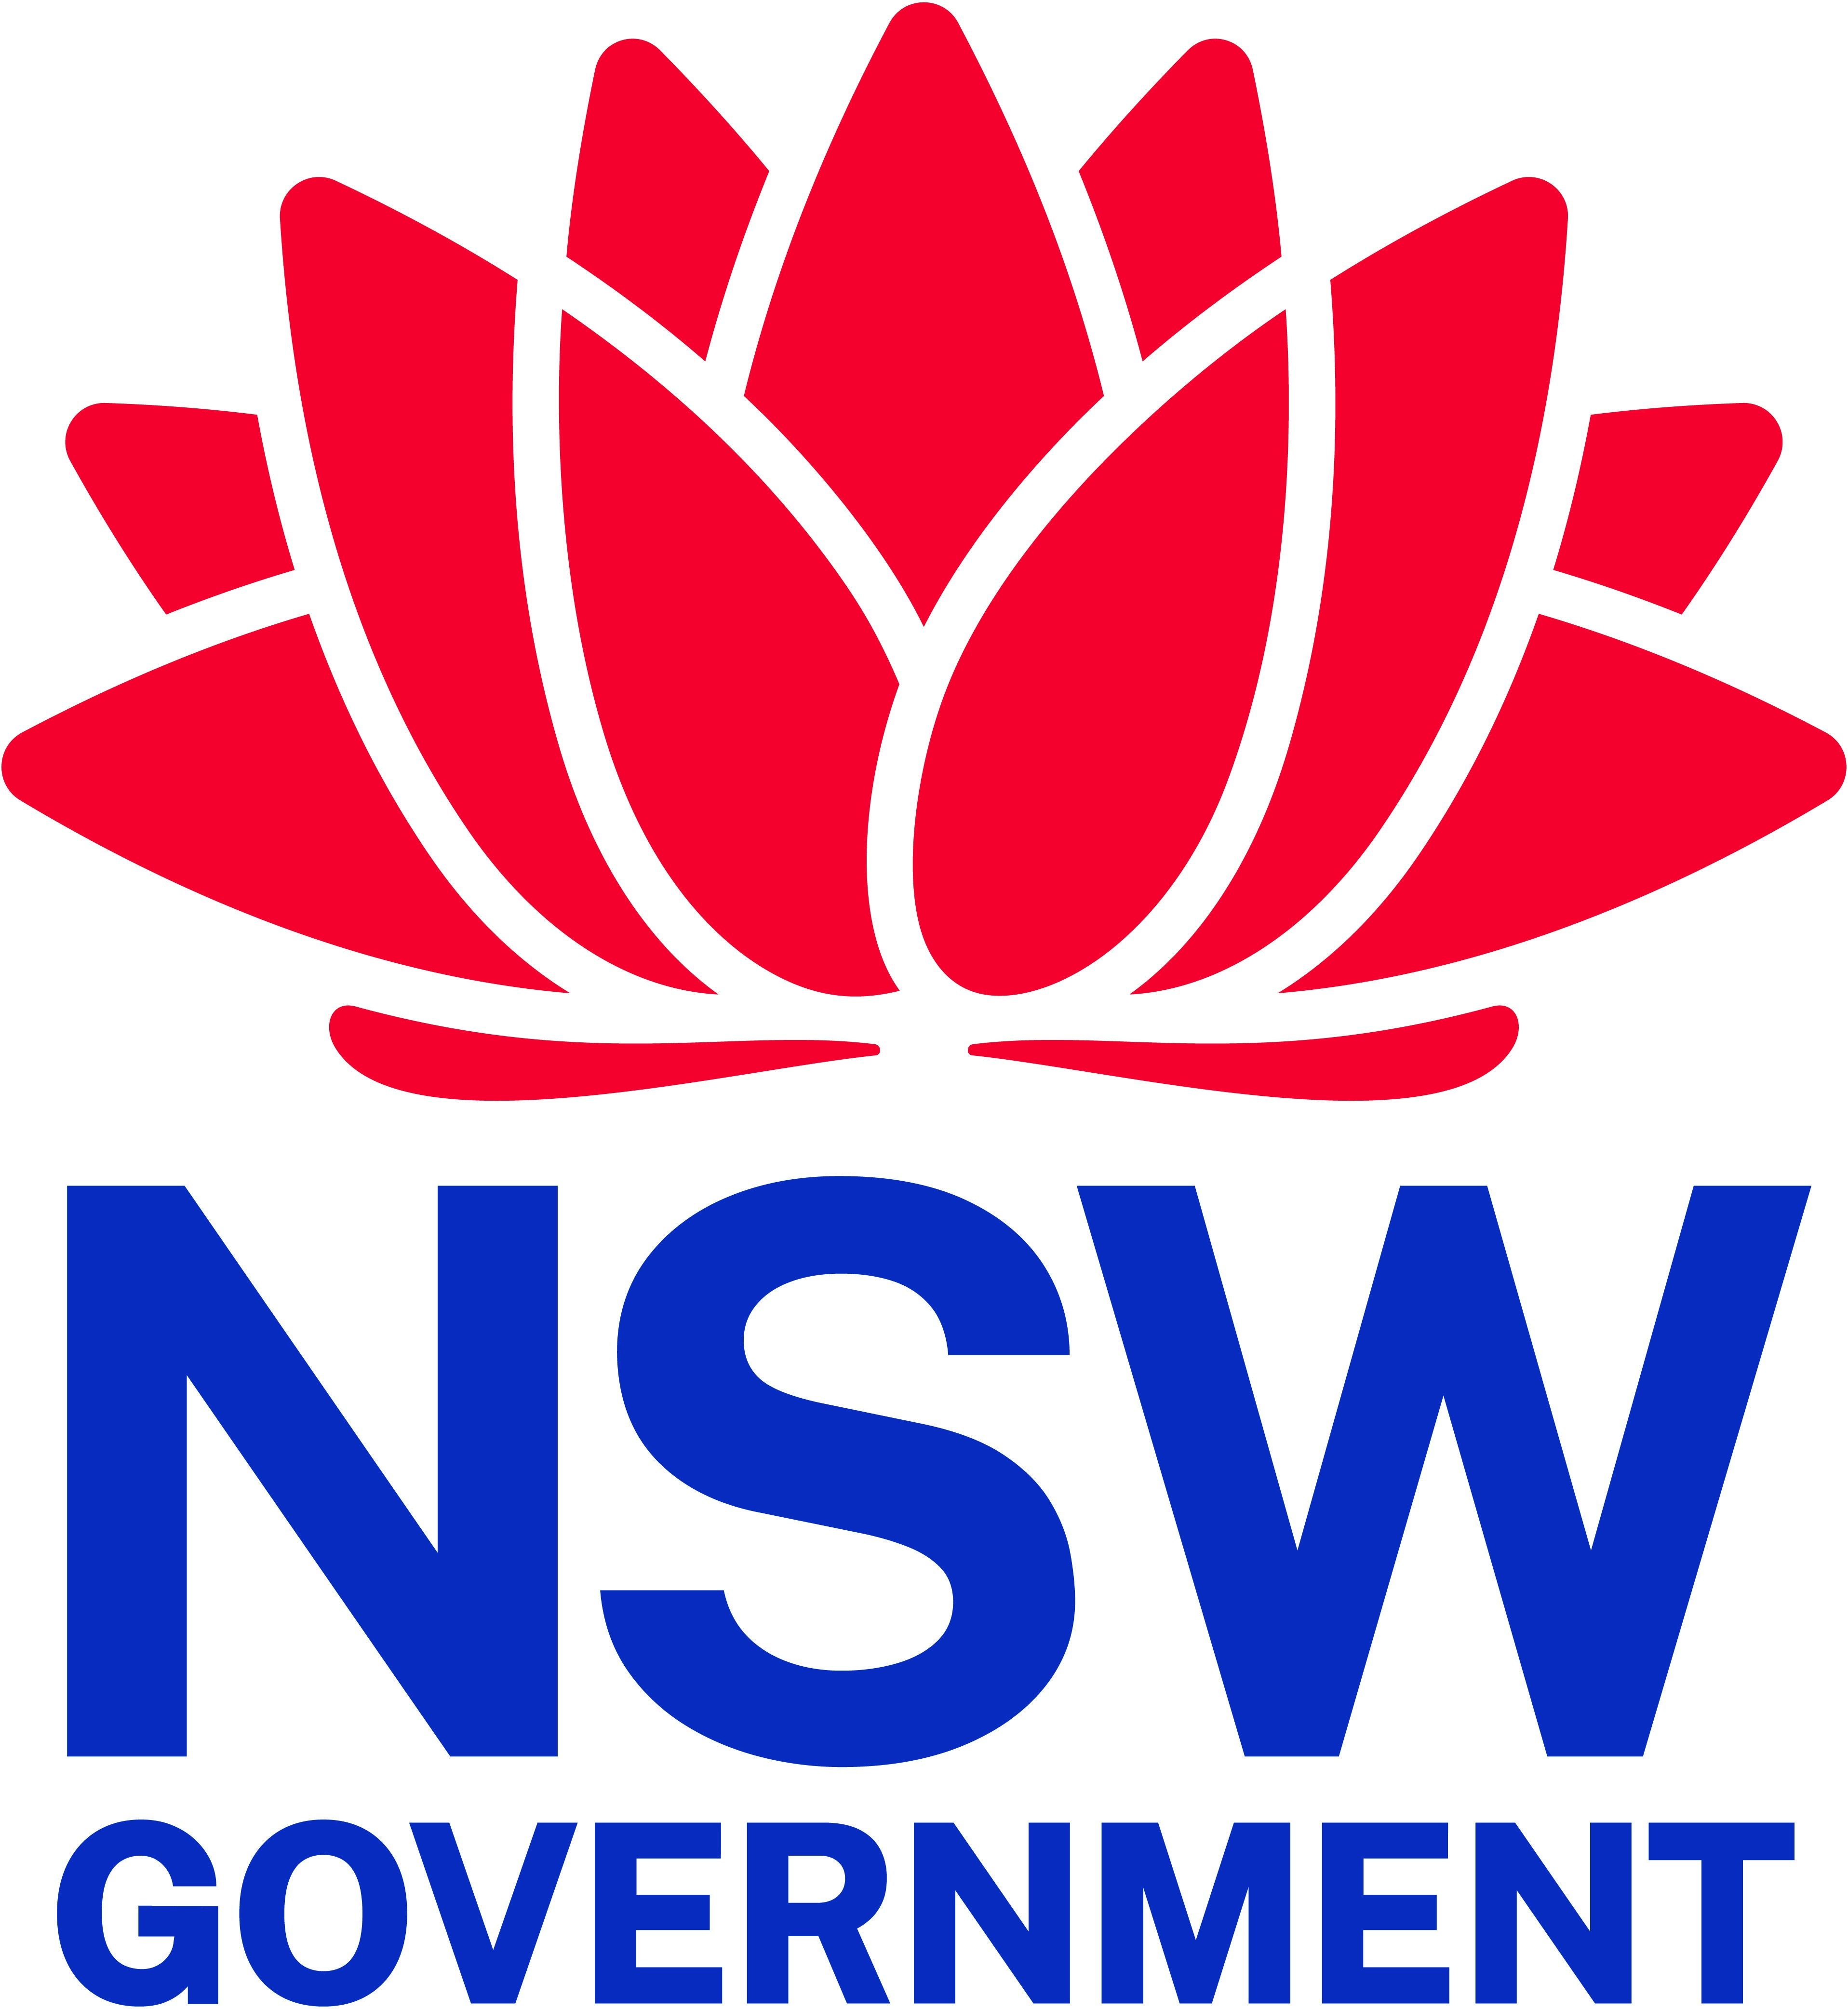 NSW government logo.jpg